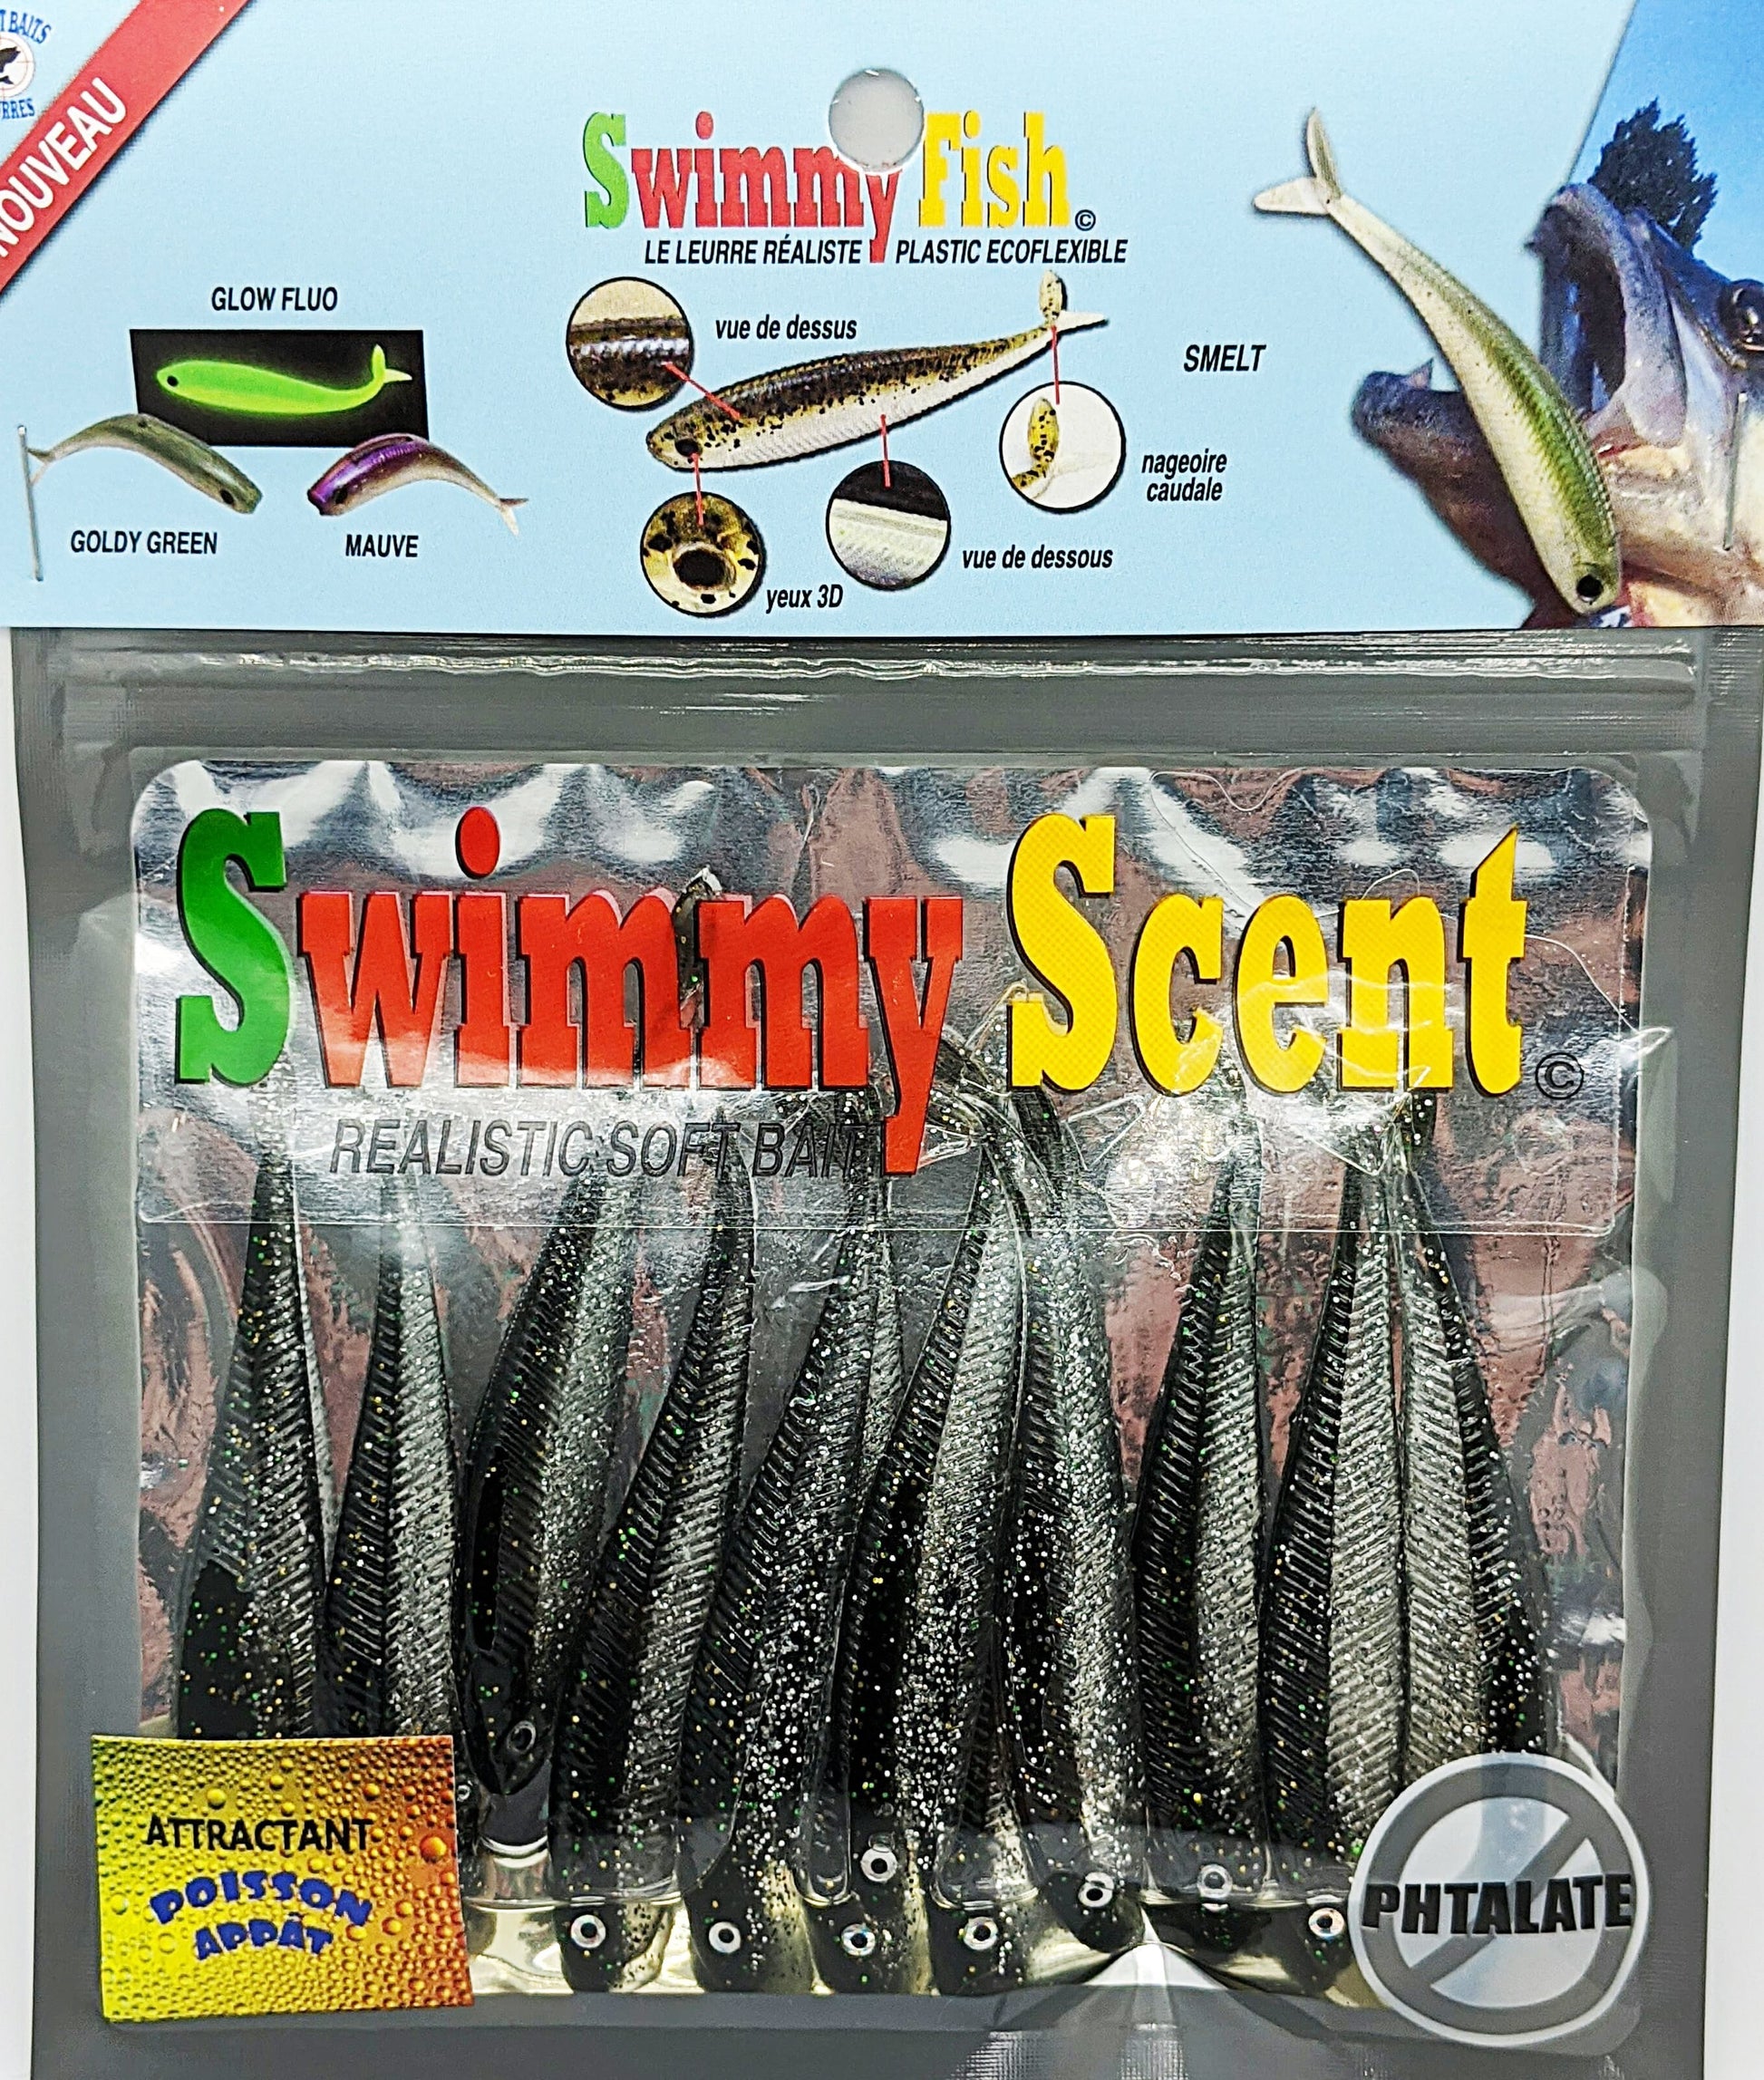 Swimmy Fish Scent 3.5 – Target Baits Leurres